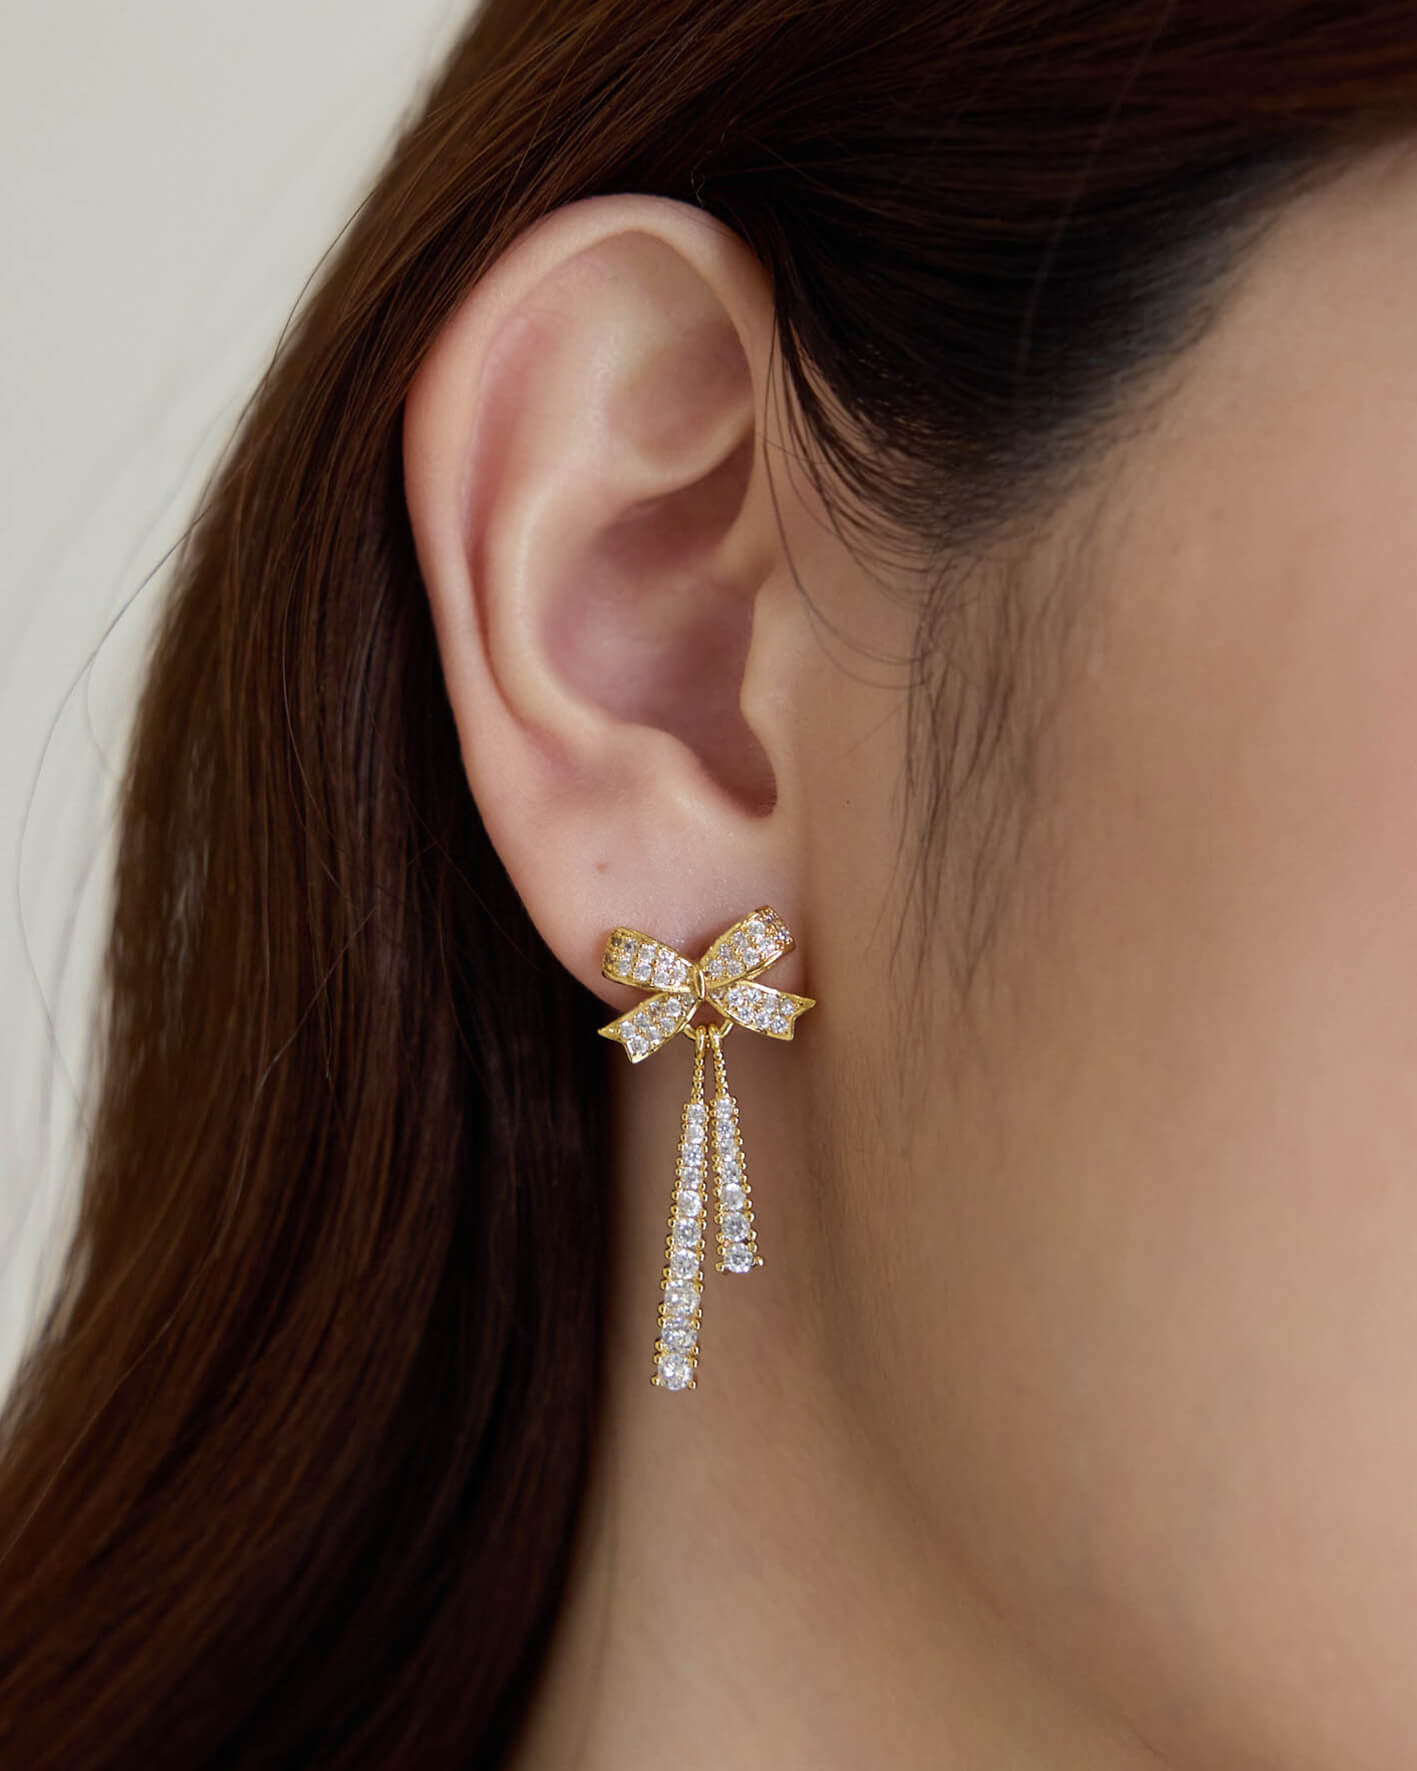 Eco安珂,韓國飾品,韓國耳環,耳針式耳環,矽膠夾耳環,透明耳夾耳環,無痛耳夾耳環,蝴蝶結垂墜耳環